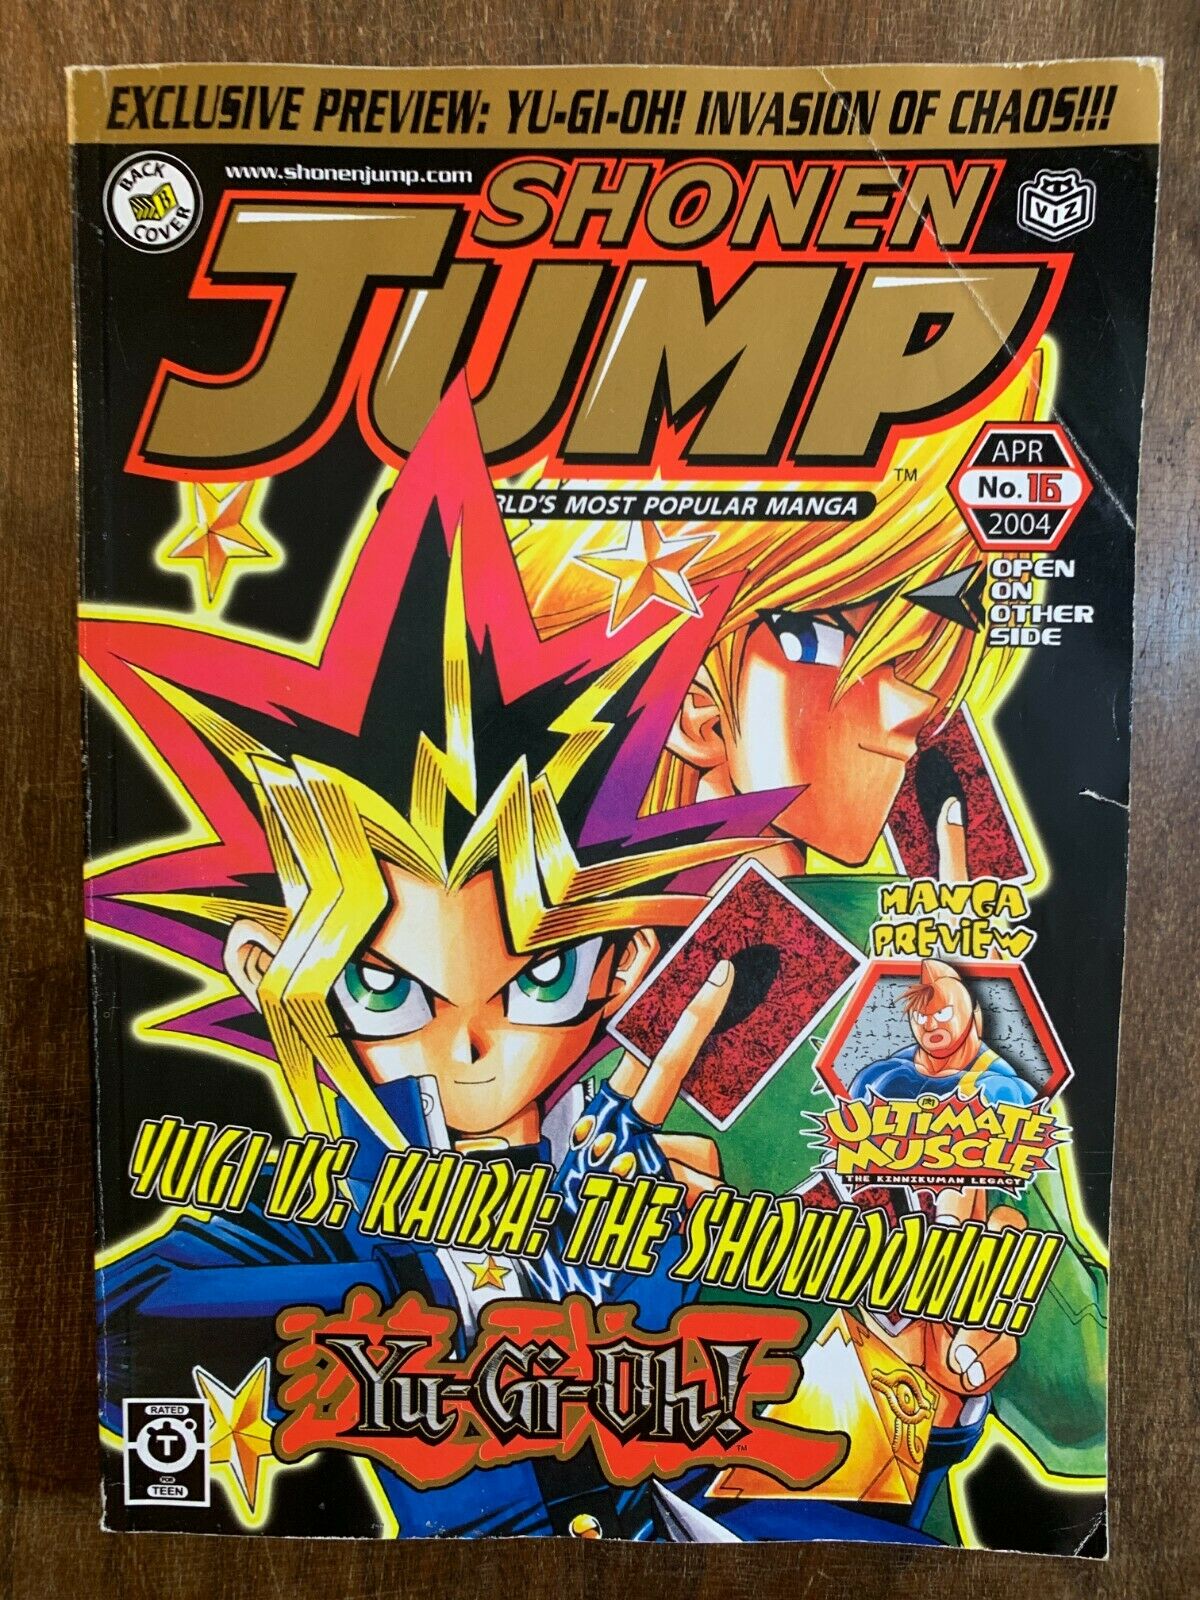 Shonen Jump April 2004,Vol 2, Num. 16, Yu-Gi-Oh, Yugi Vs Kaiba: The Showdown